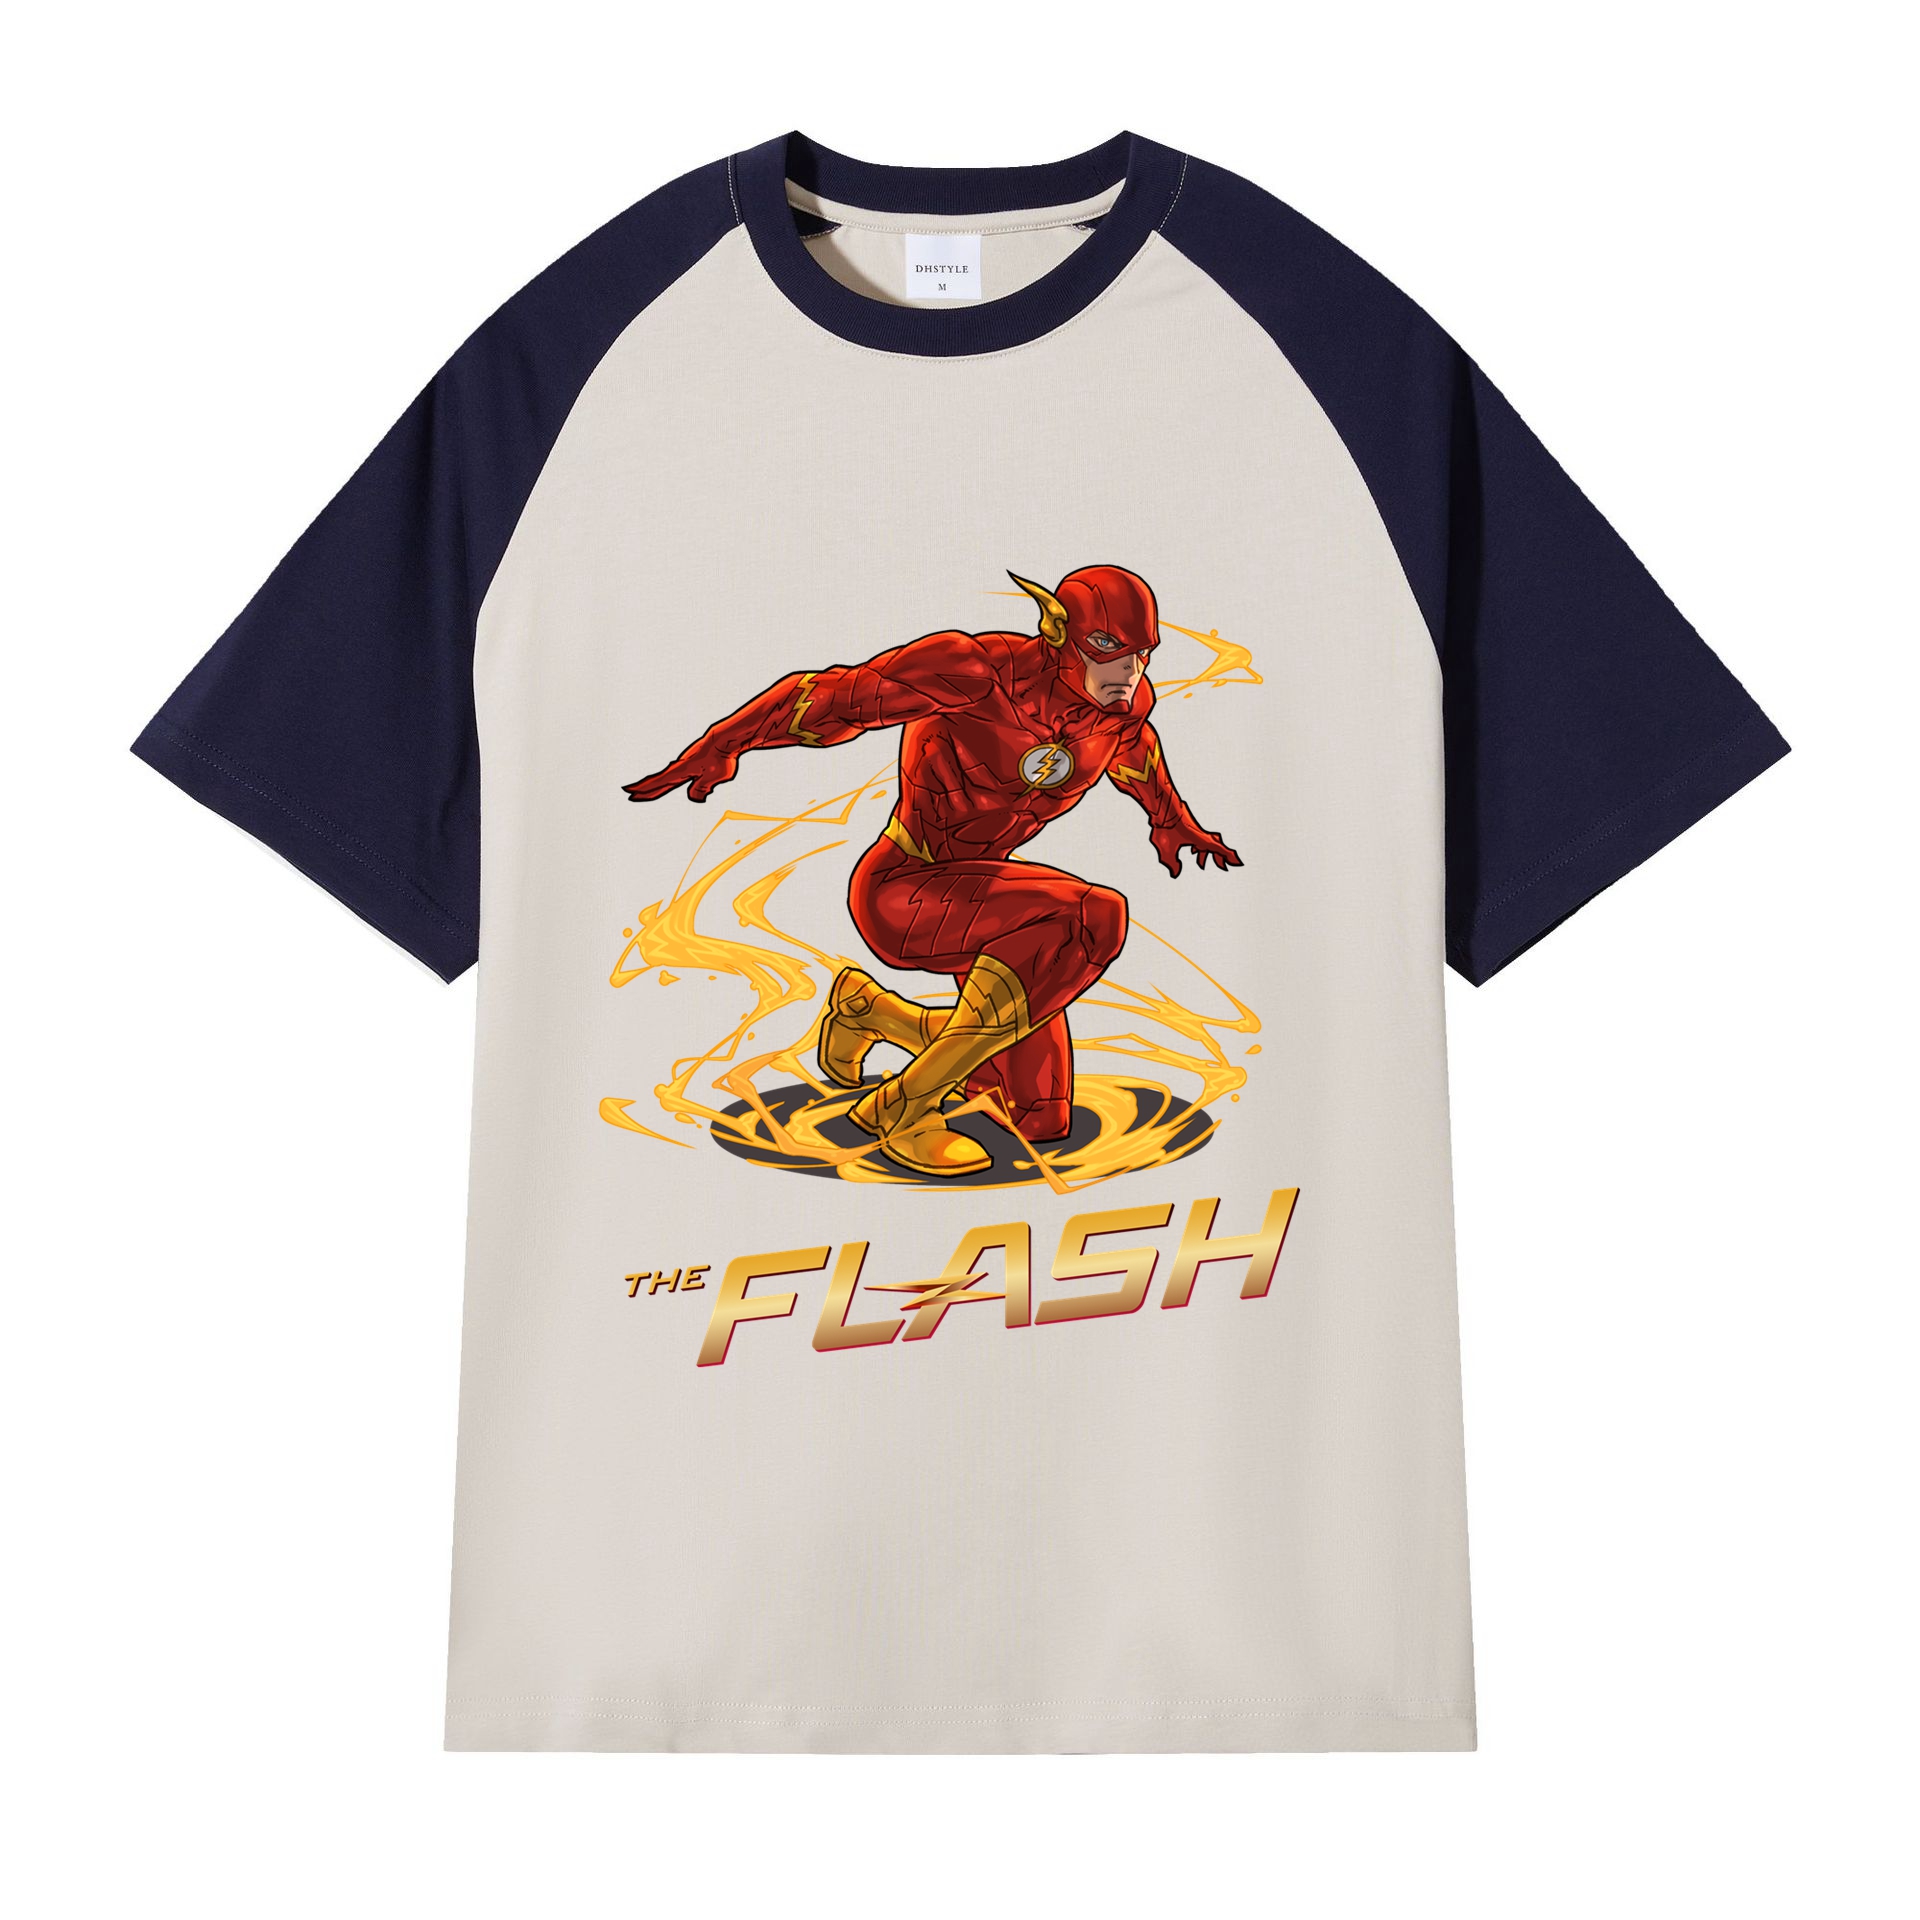 The Flash Summer Short Sleeves Tee Raglan Sleeves T Shirt Cotton Made